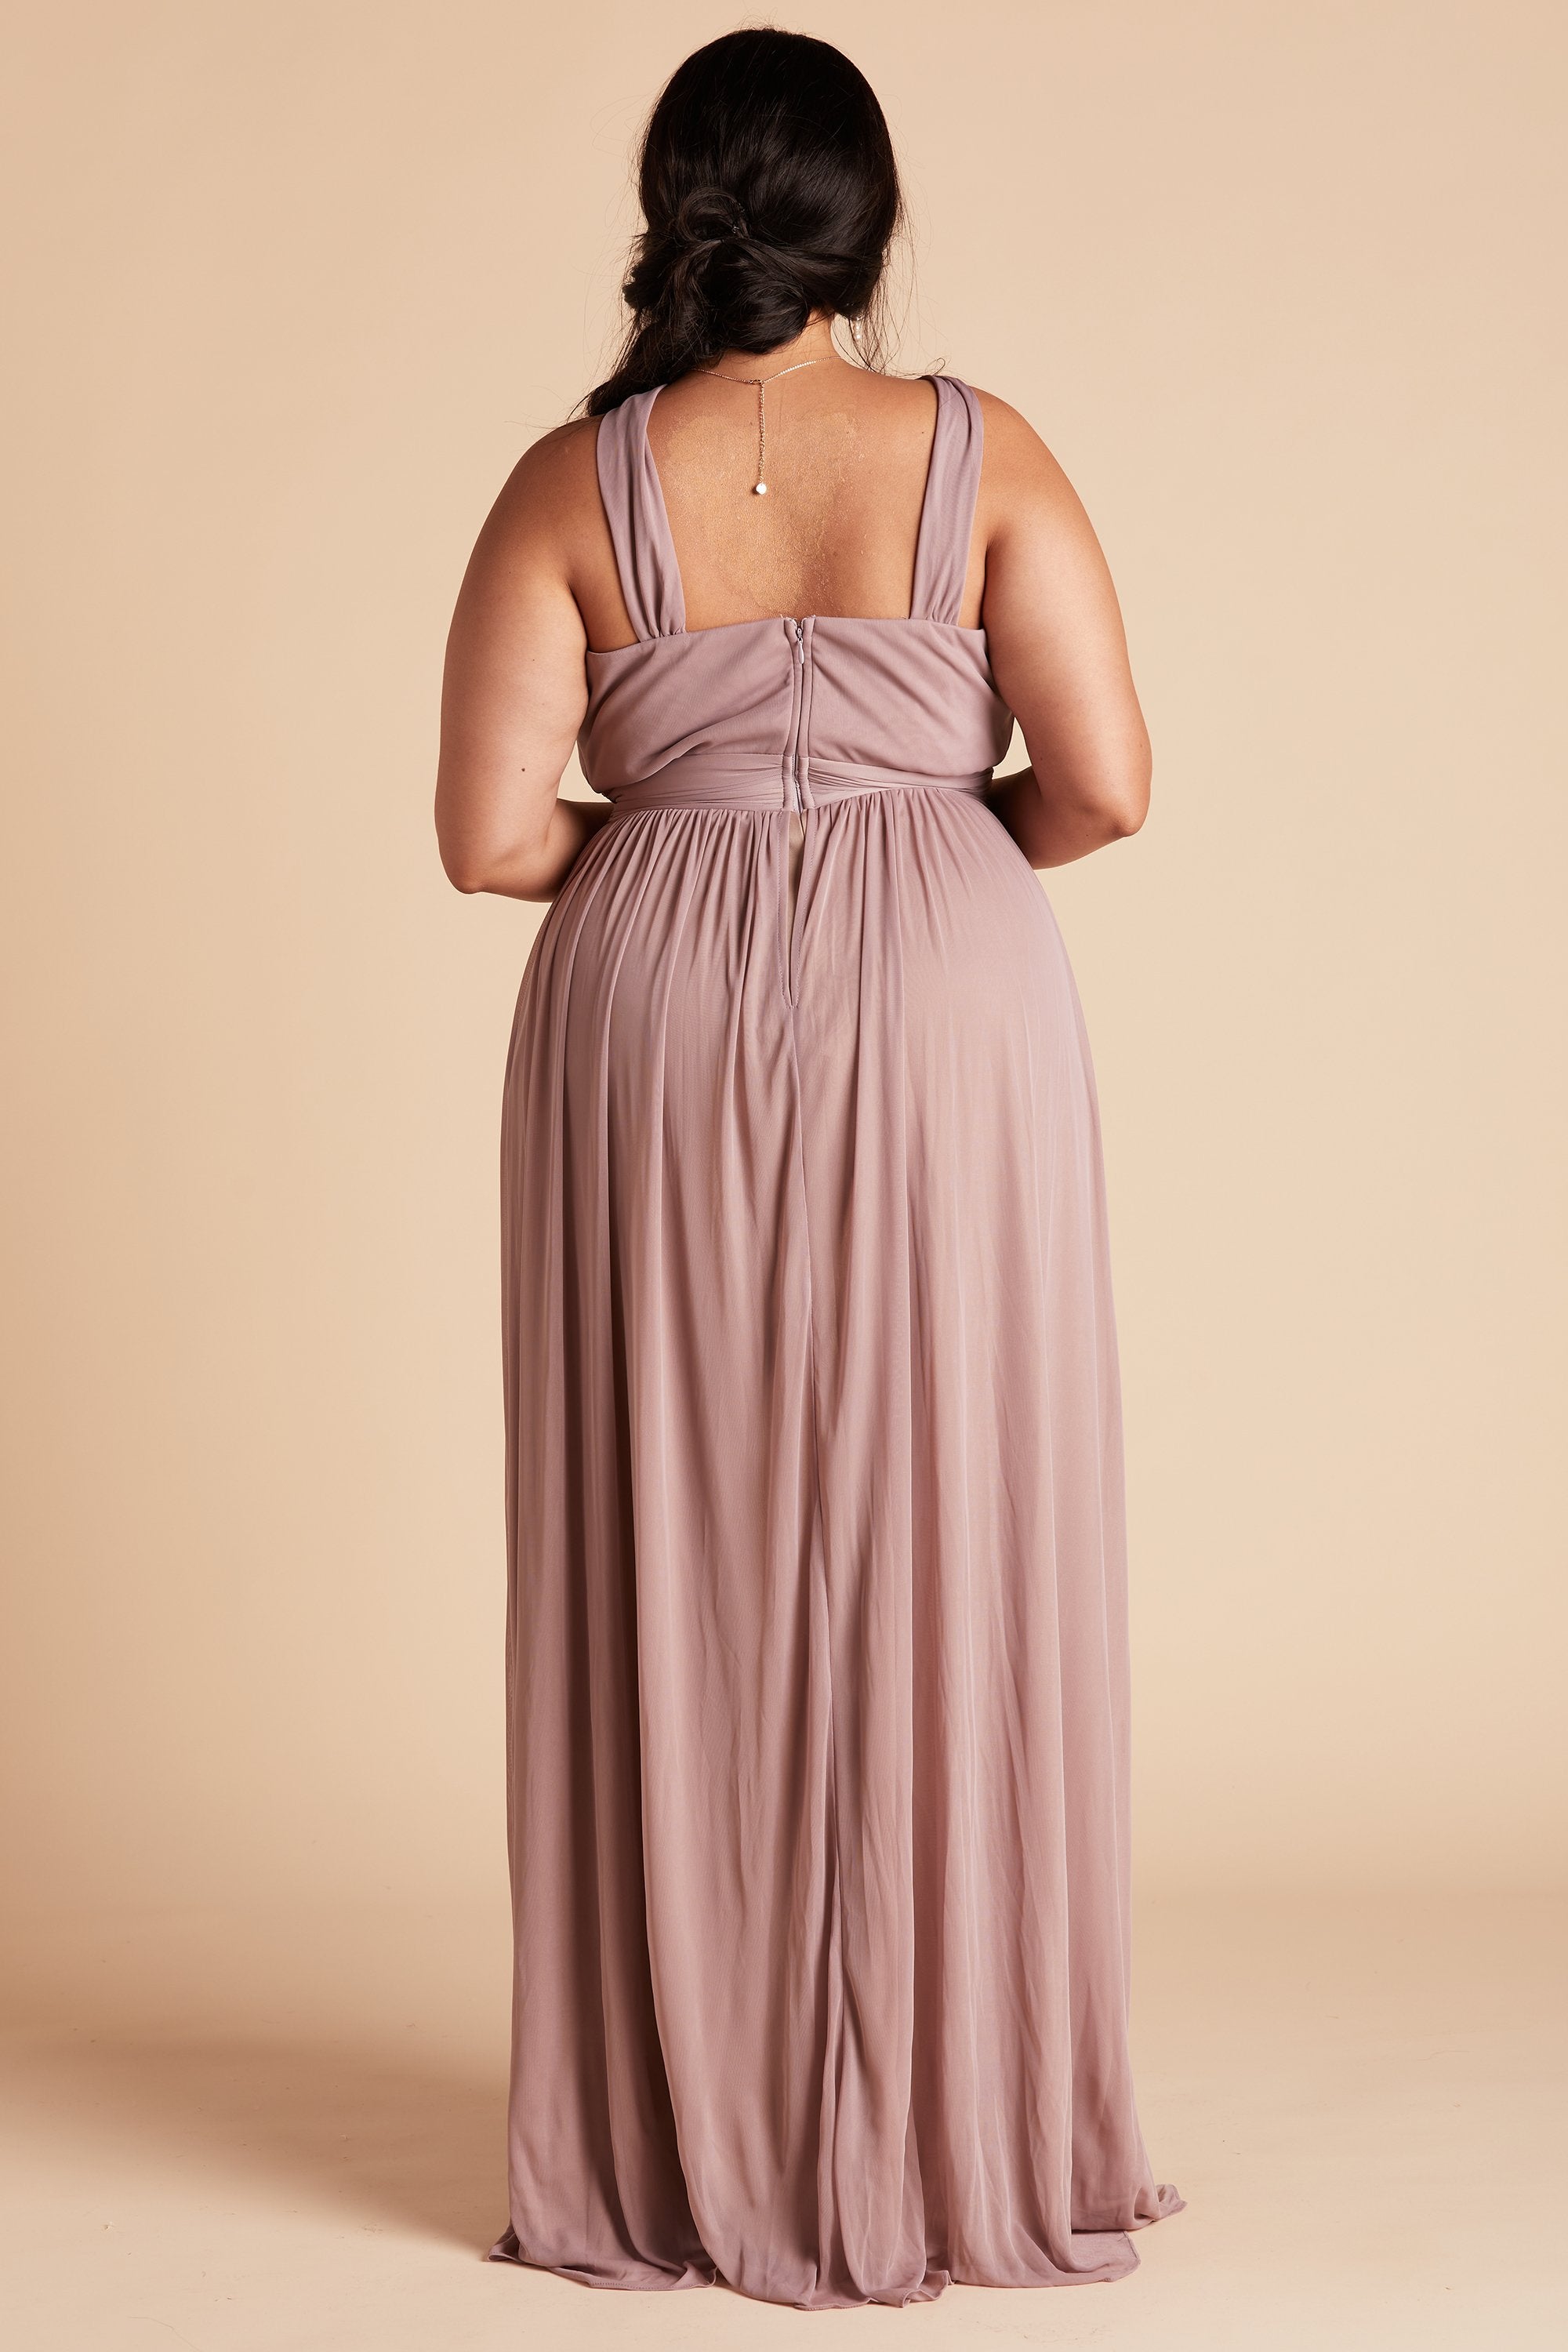 Kiko plus size bridesmaid dress in mauve pink chiffon by Birdy Grey, back view